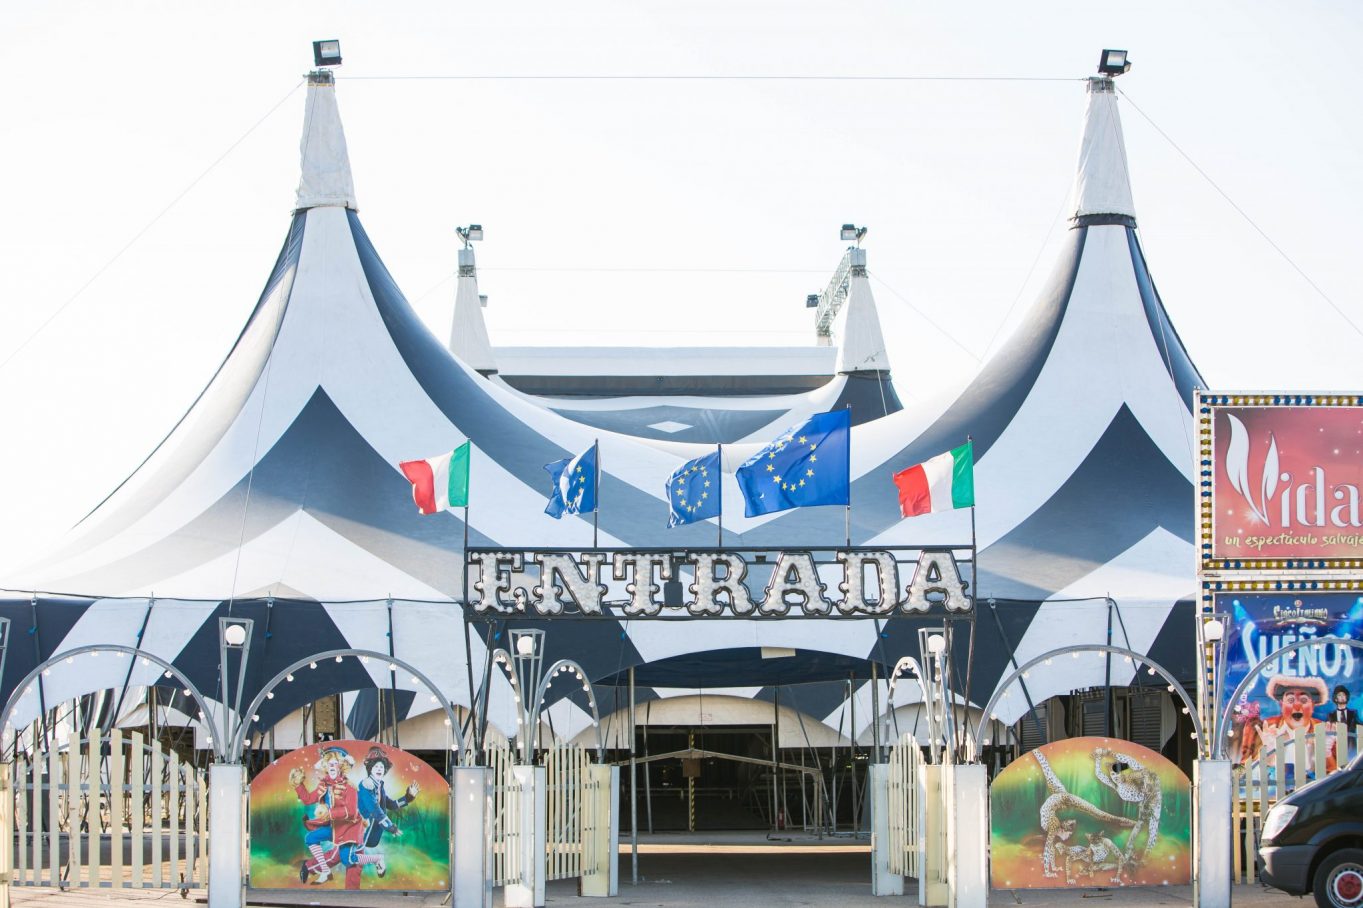 Il Circo Italiano se ubica en Valdespartera.